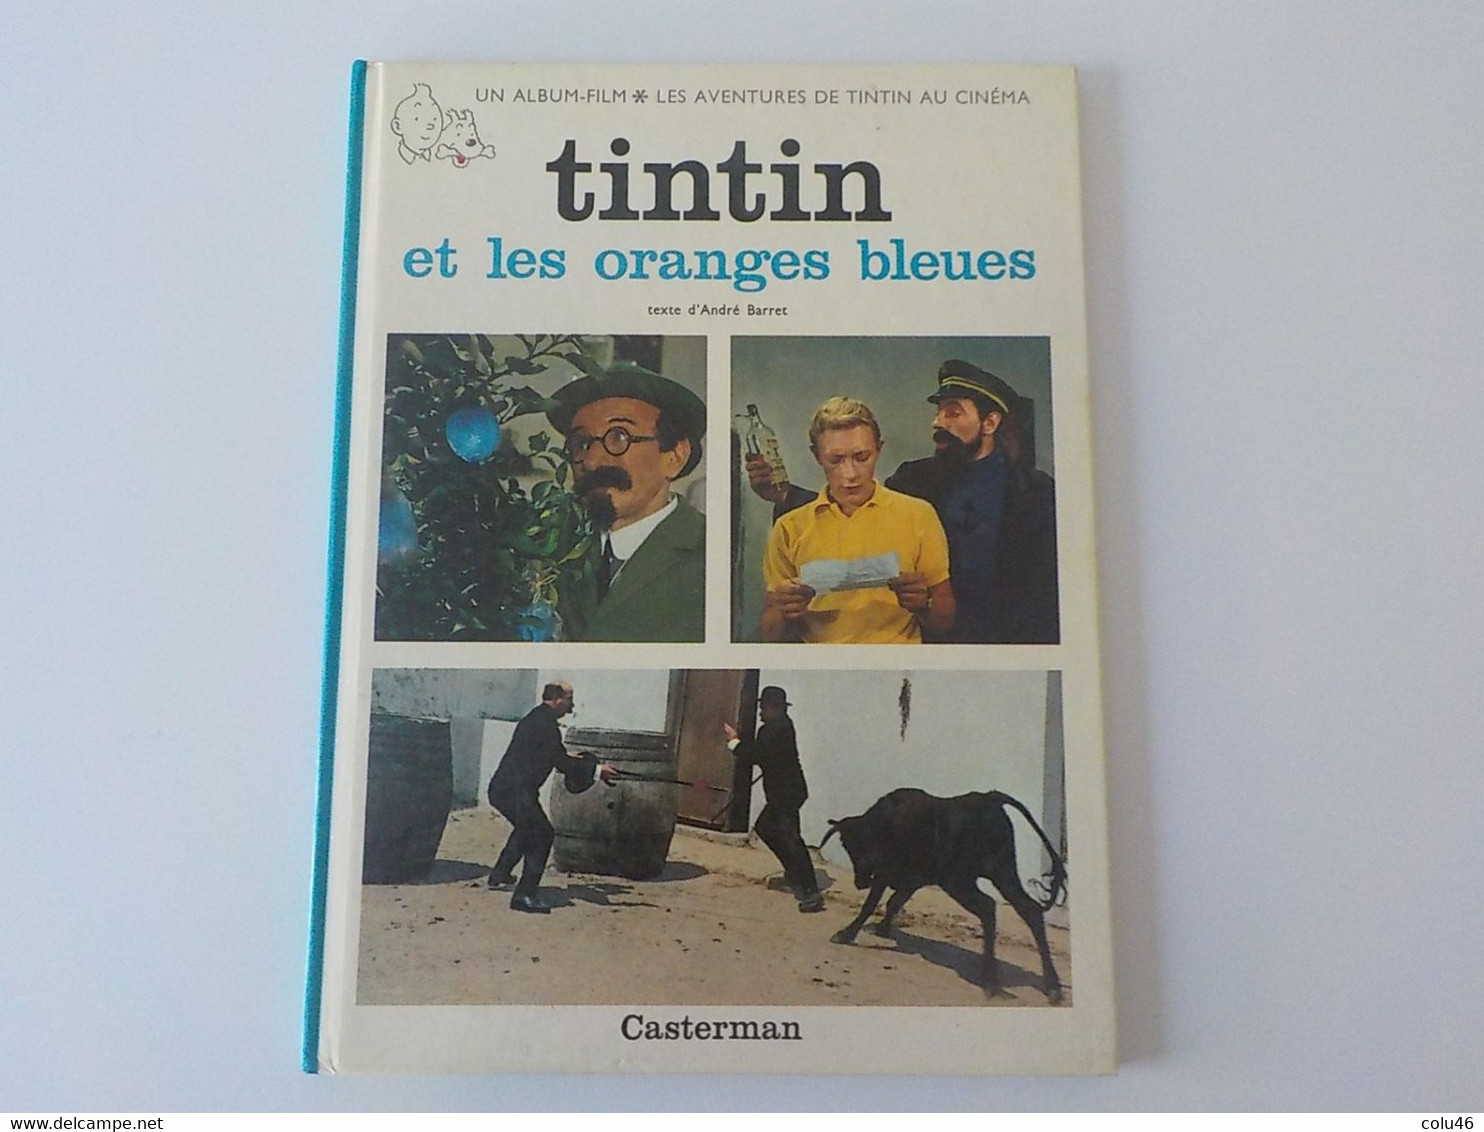 1981 Tintin Et Les Oranges Bleues Hergé Casterman Les Aventures De Tintin Au Cinéma Album Film - Tintin